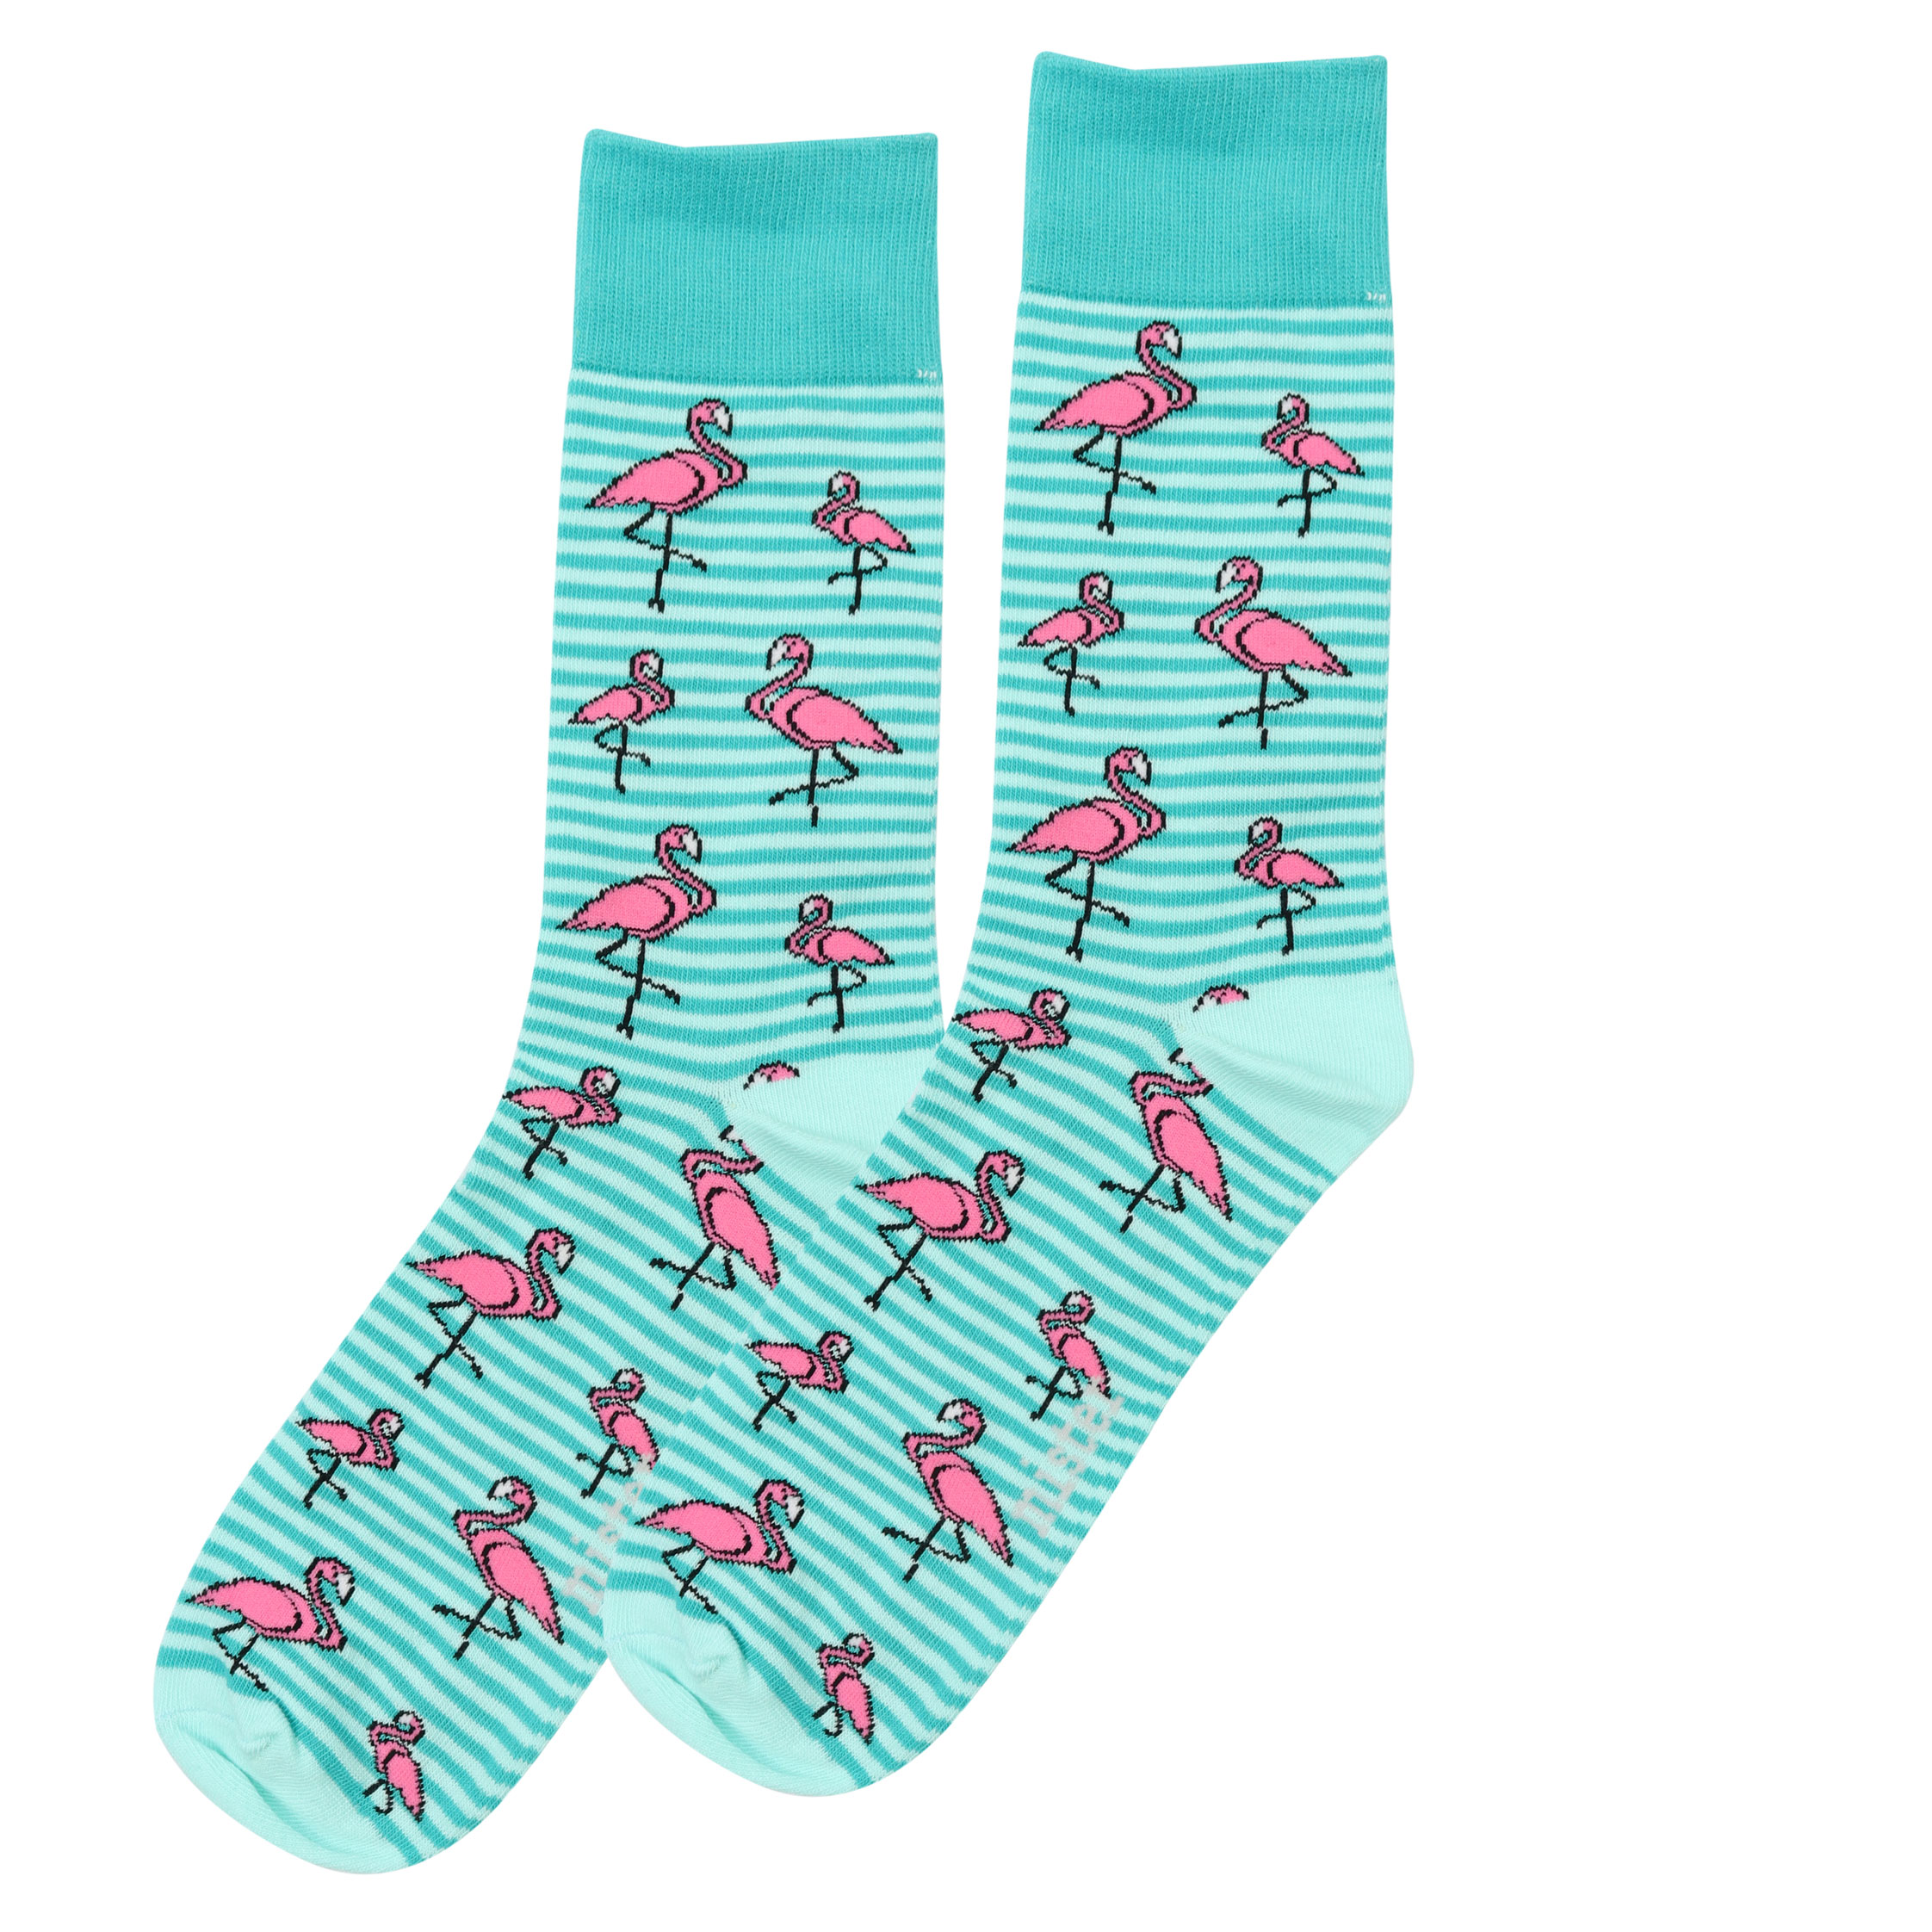 Flamingo men's fun socks - Wicked Sista | Cosmetic Bags, Jewellery ...